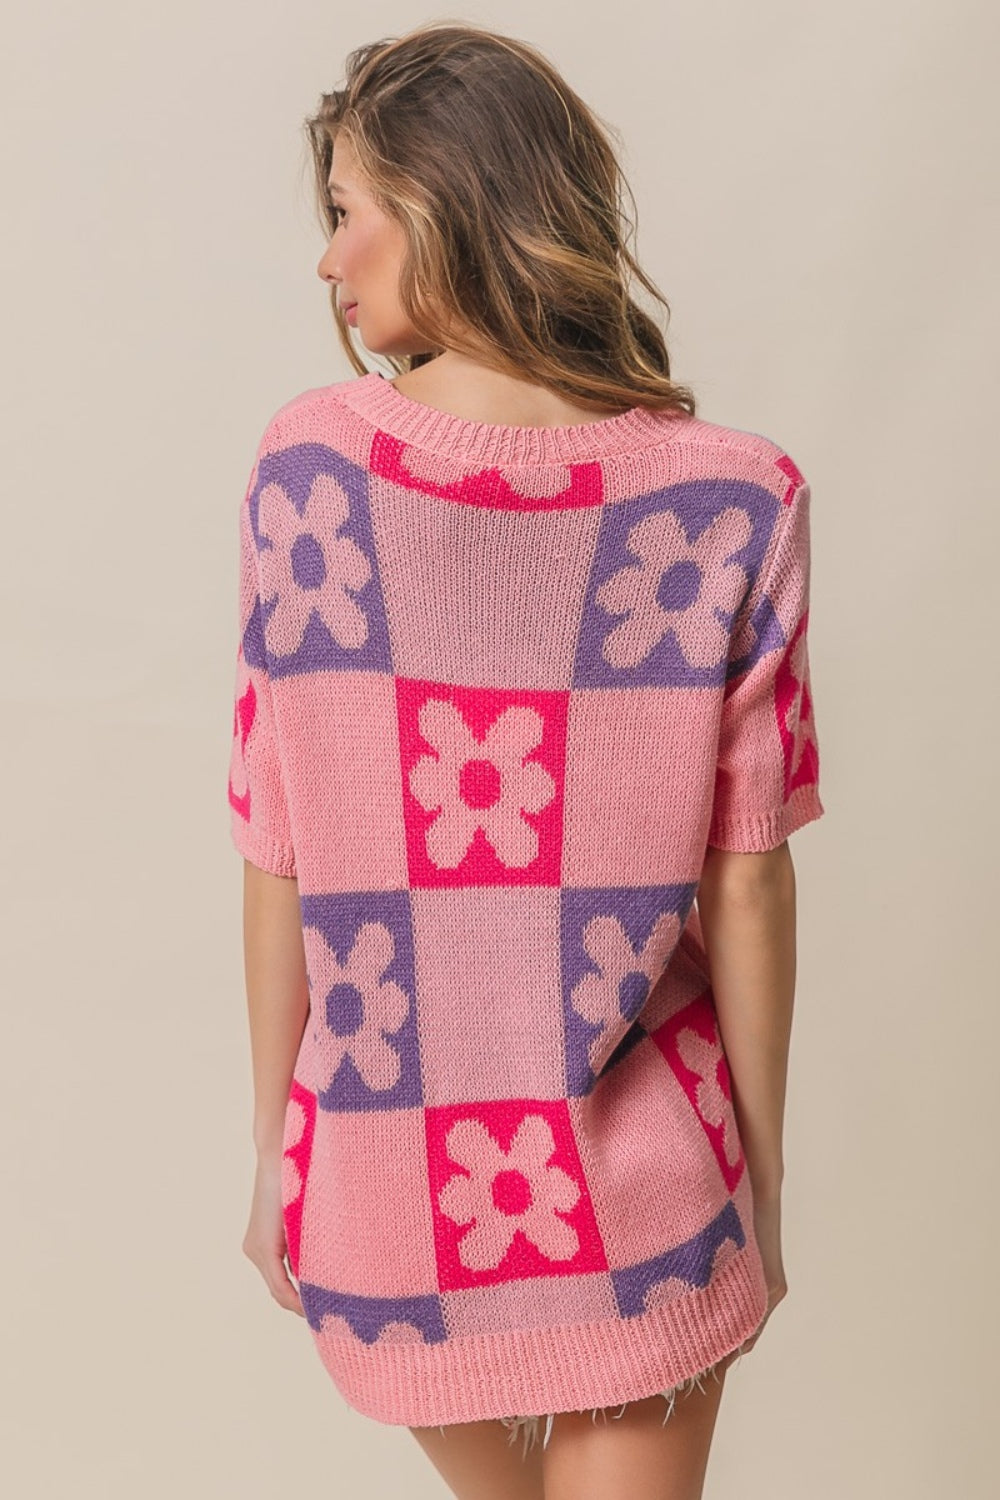 BiBi Flower Checker Pattern Short Sleeve Sweater